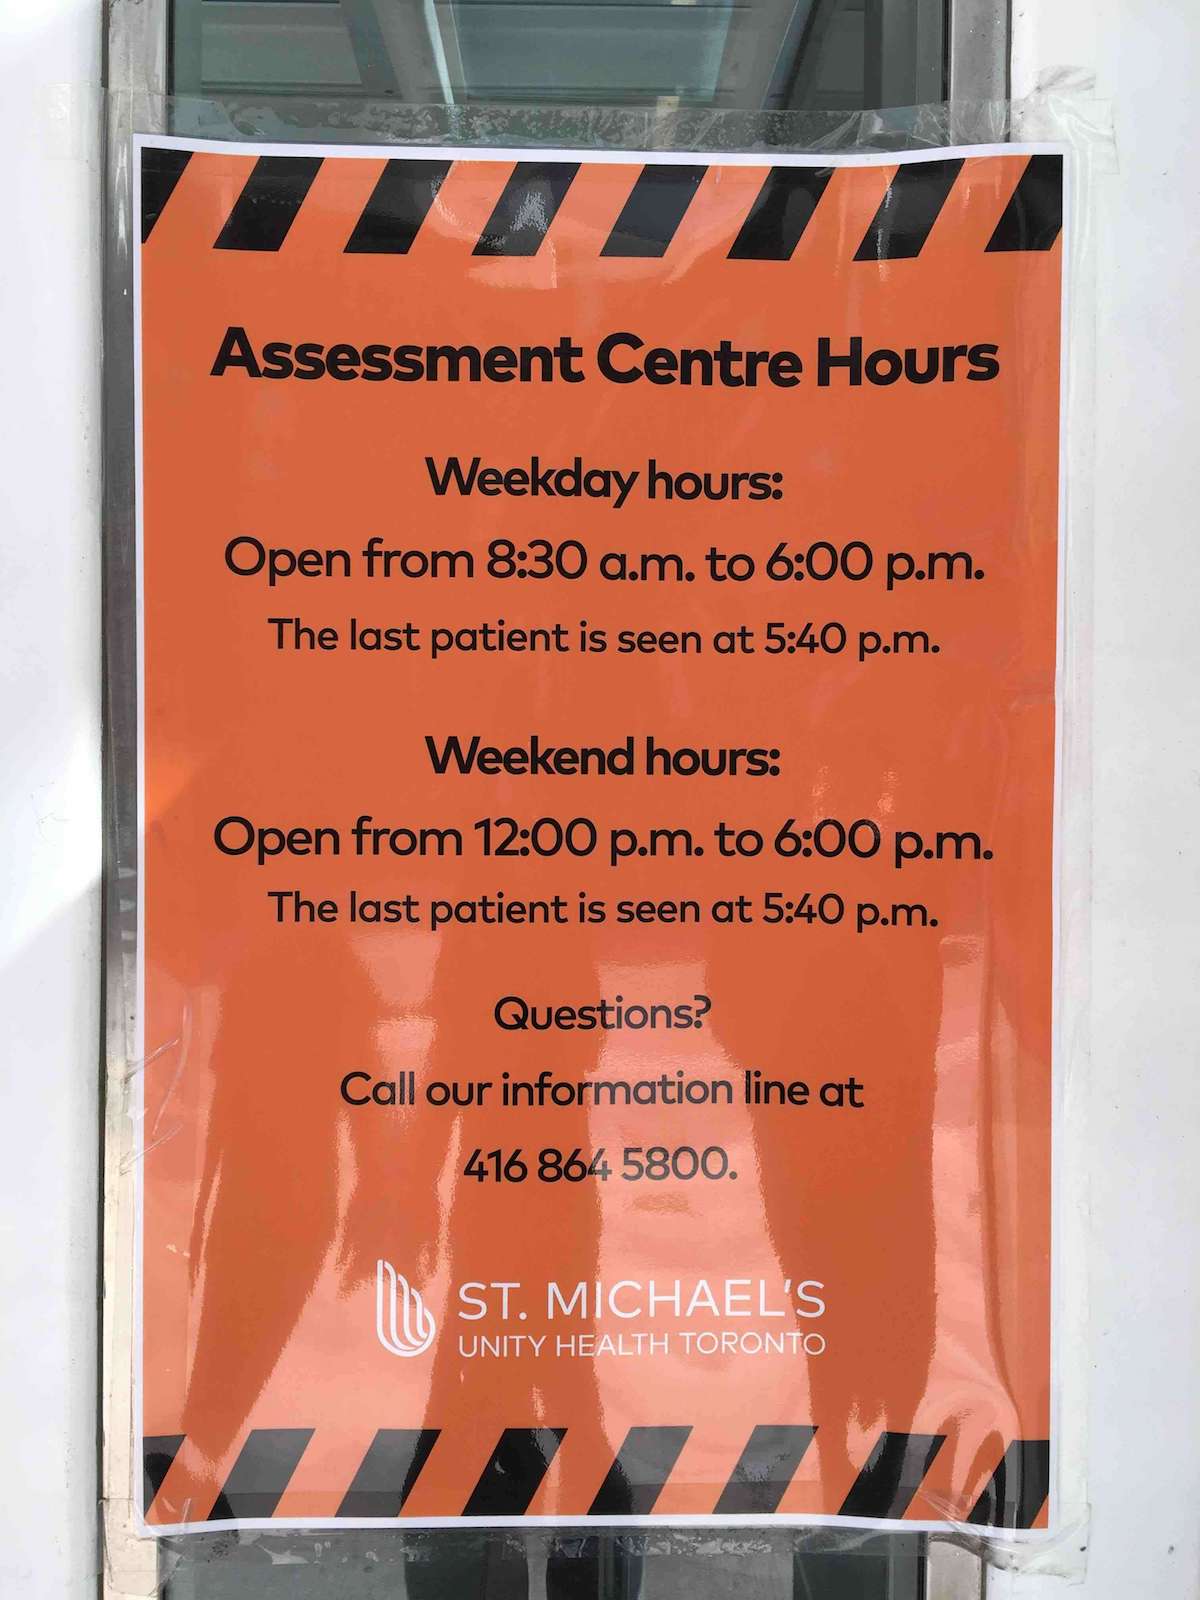 Assessment Centre Hours